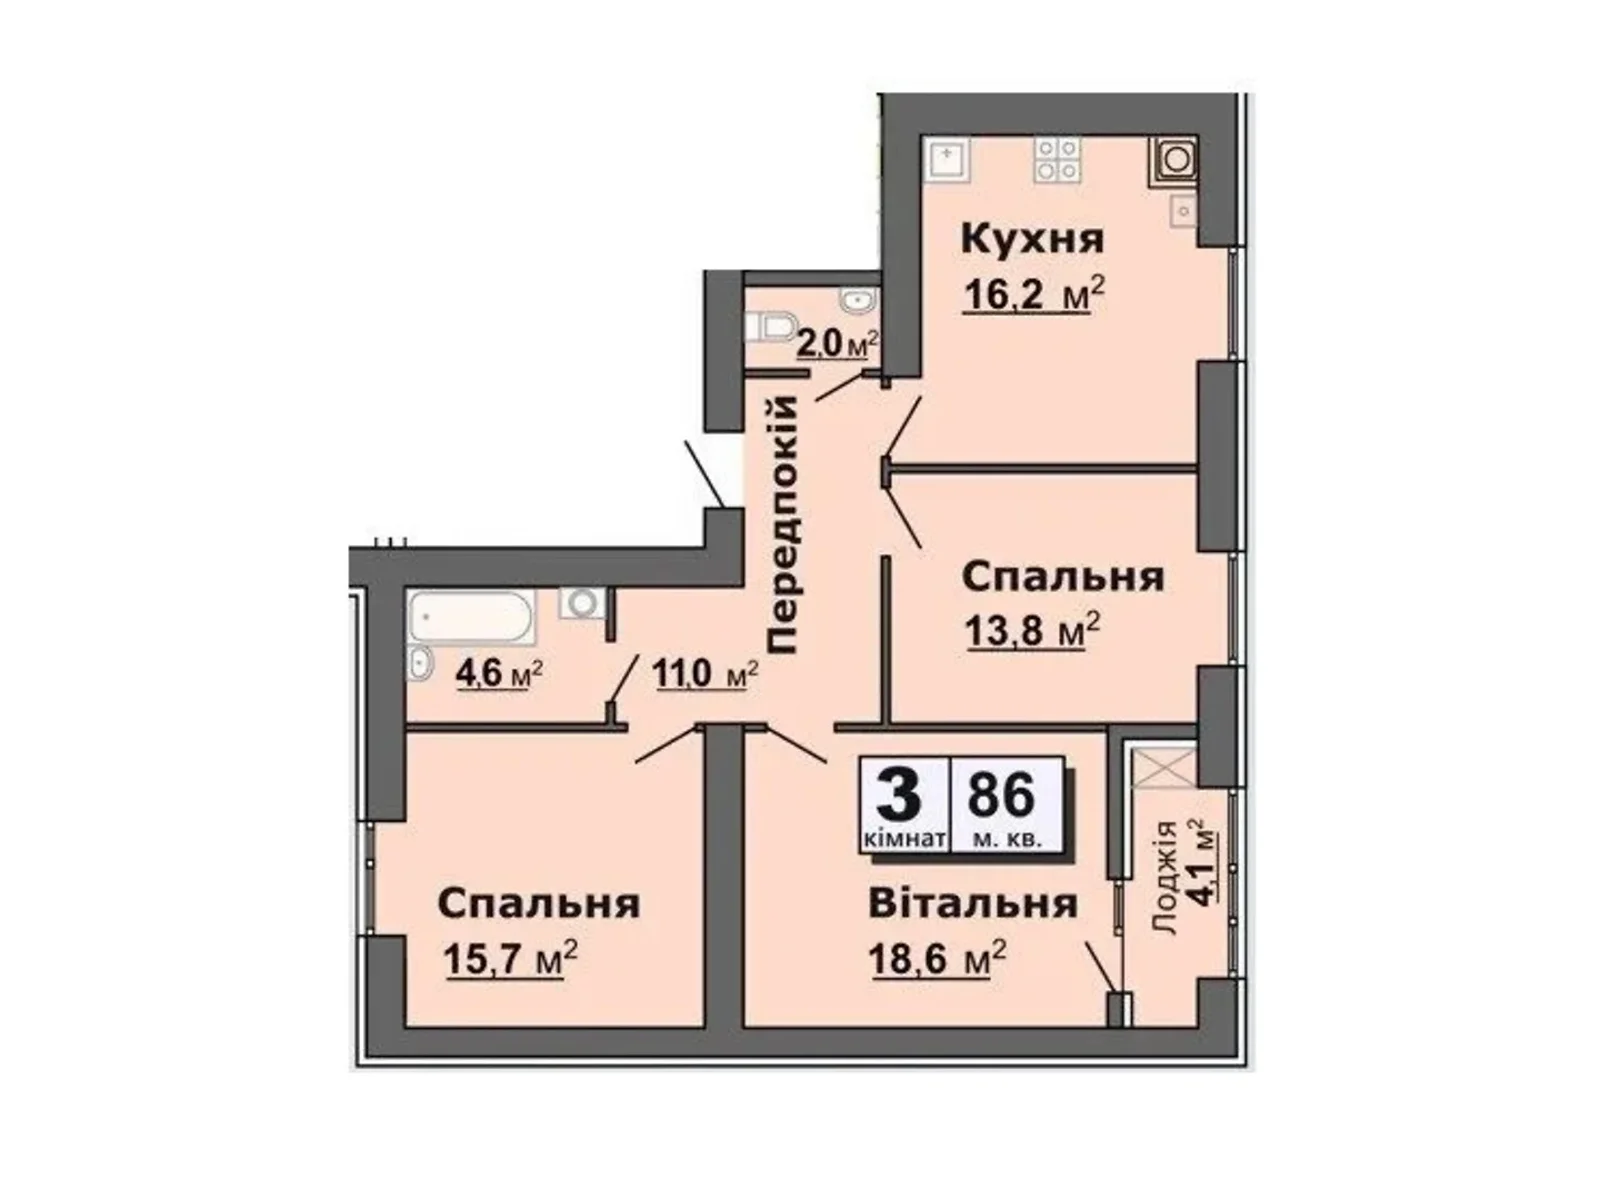 3-кімнатна квартира 86 кв. м у Луцьку